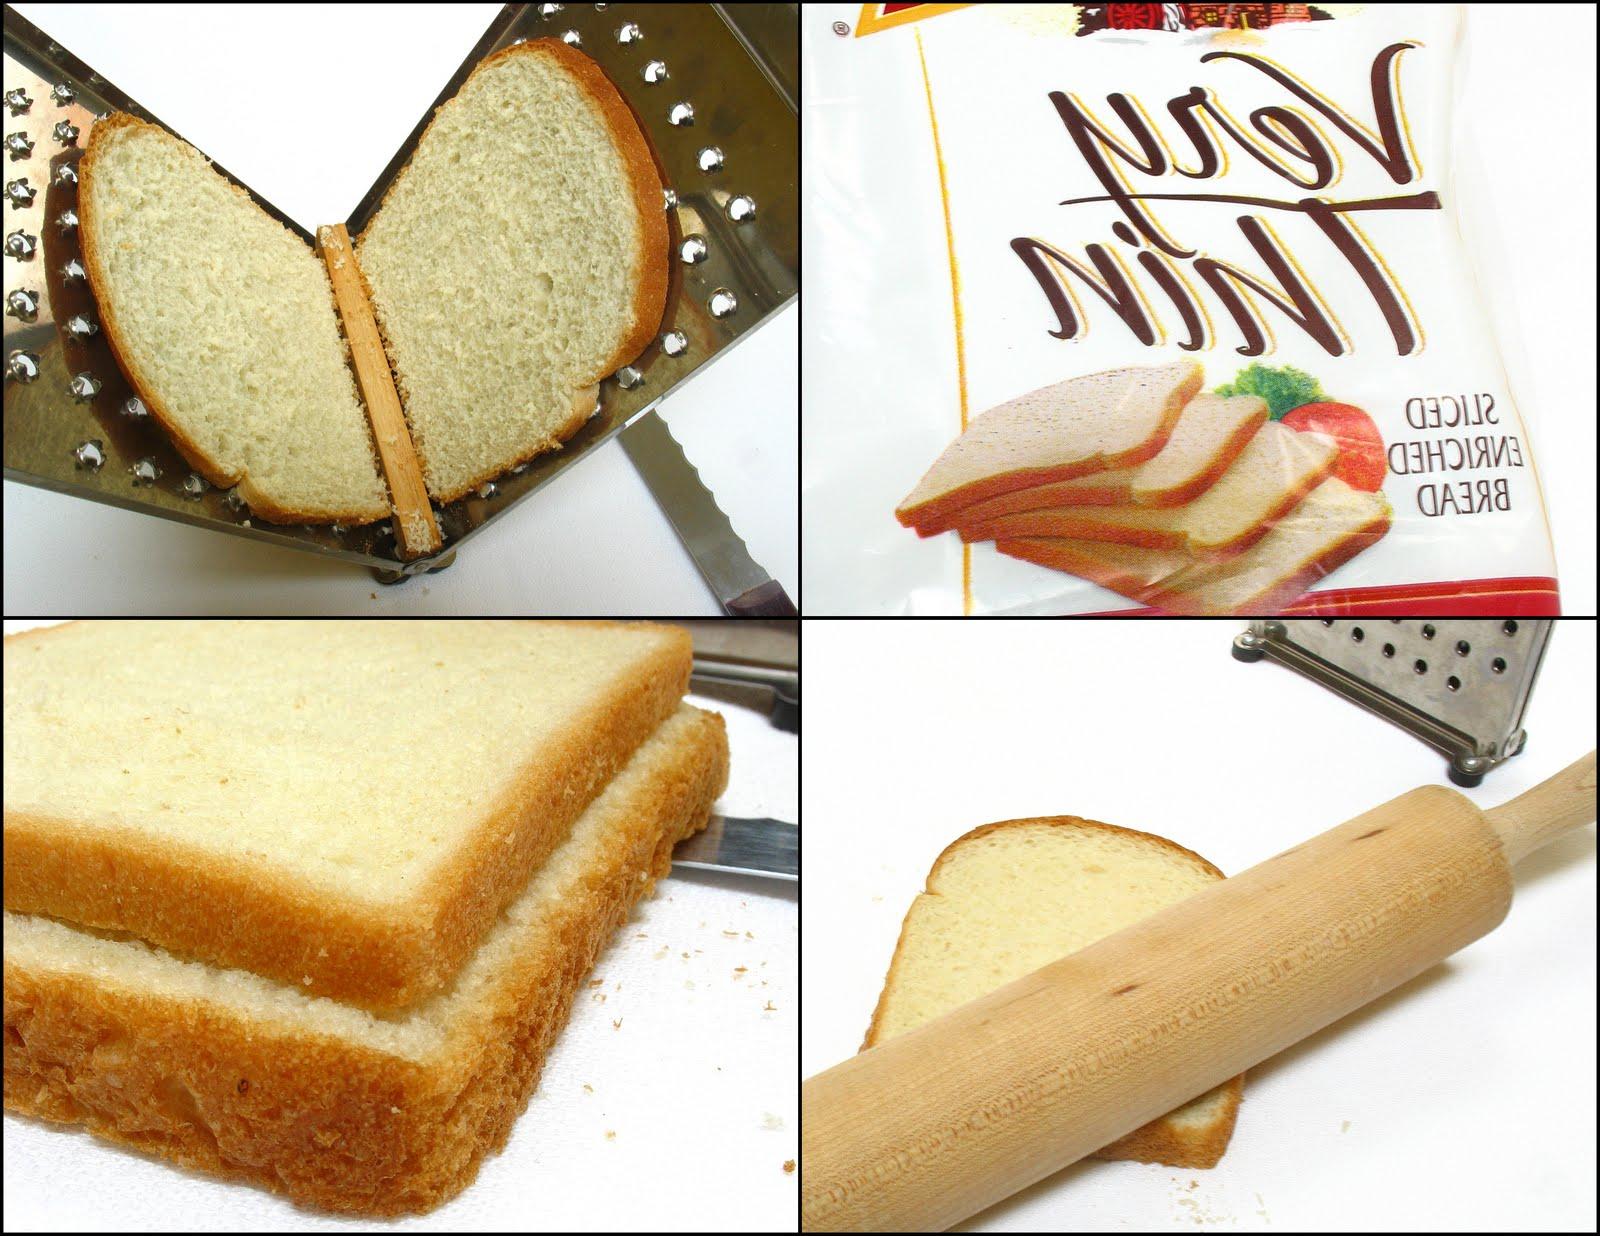 of each piece of bread.